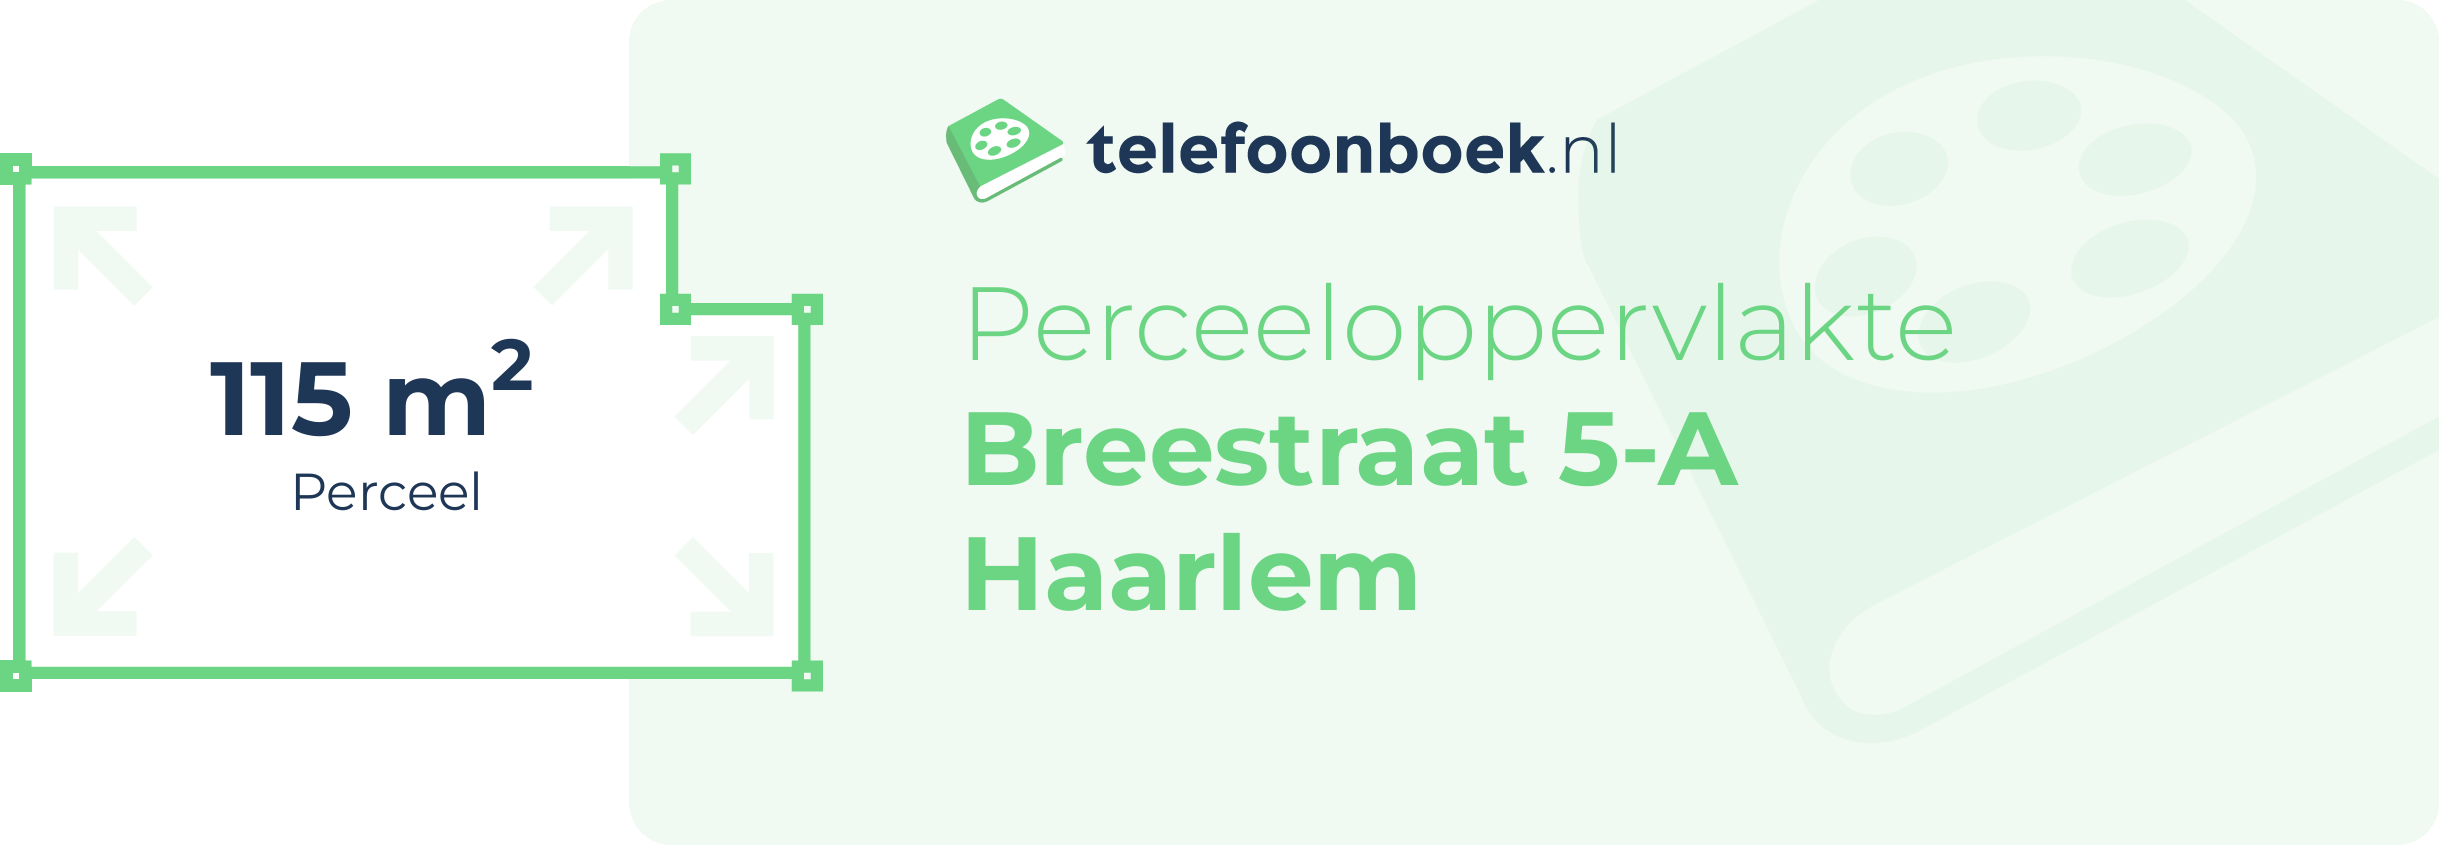 Perceeloppervlakte Breestraat 5-A Haarlem